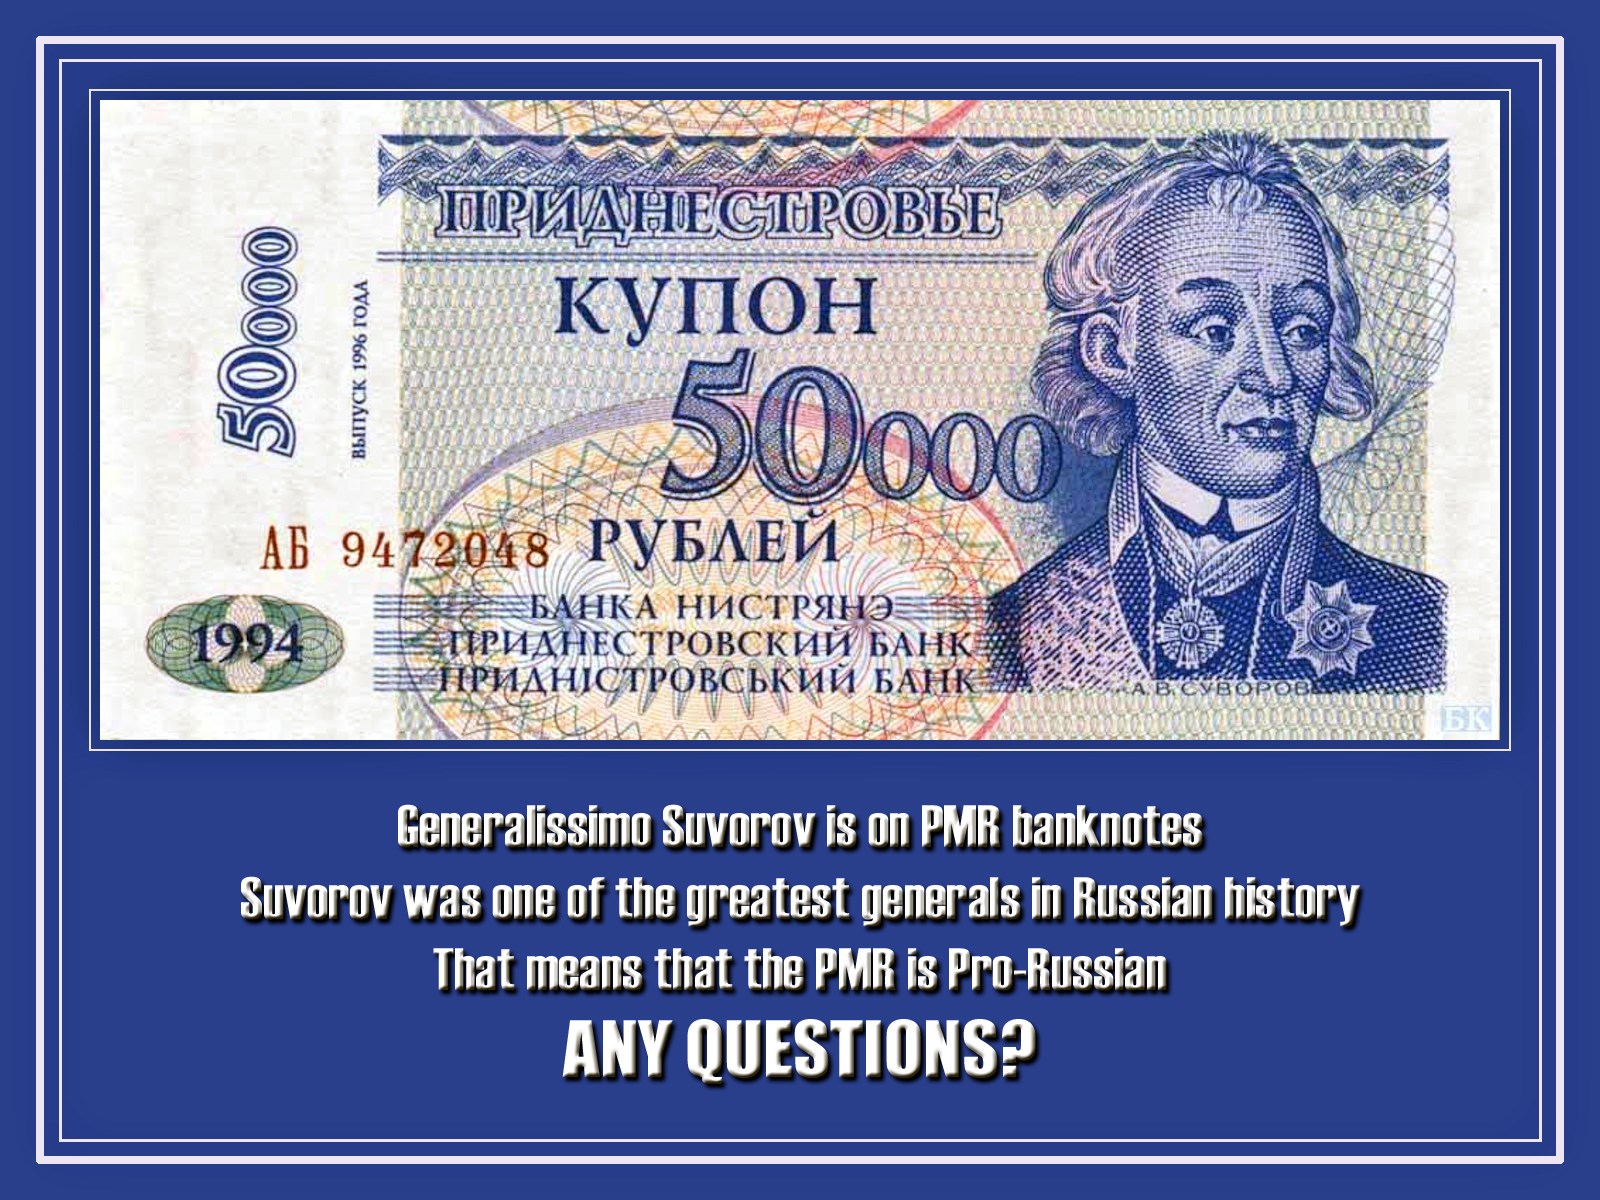 00 Pridnesrovia money PMR. 22.03.15